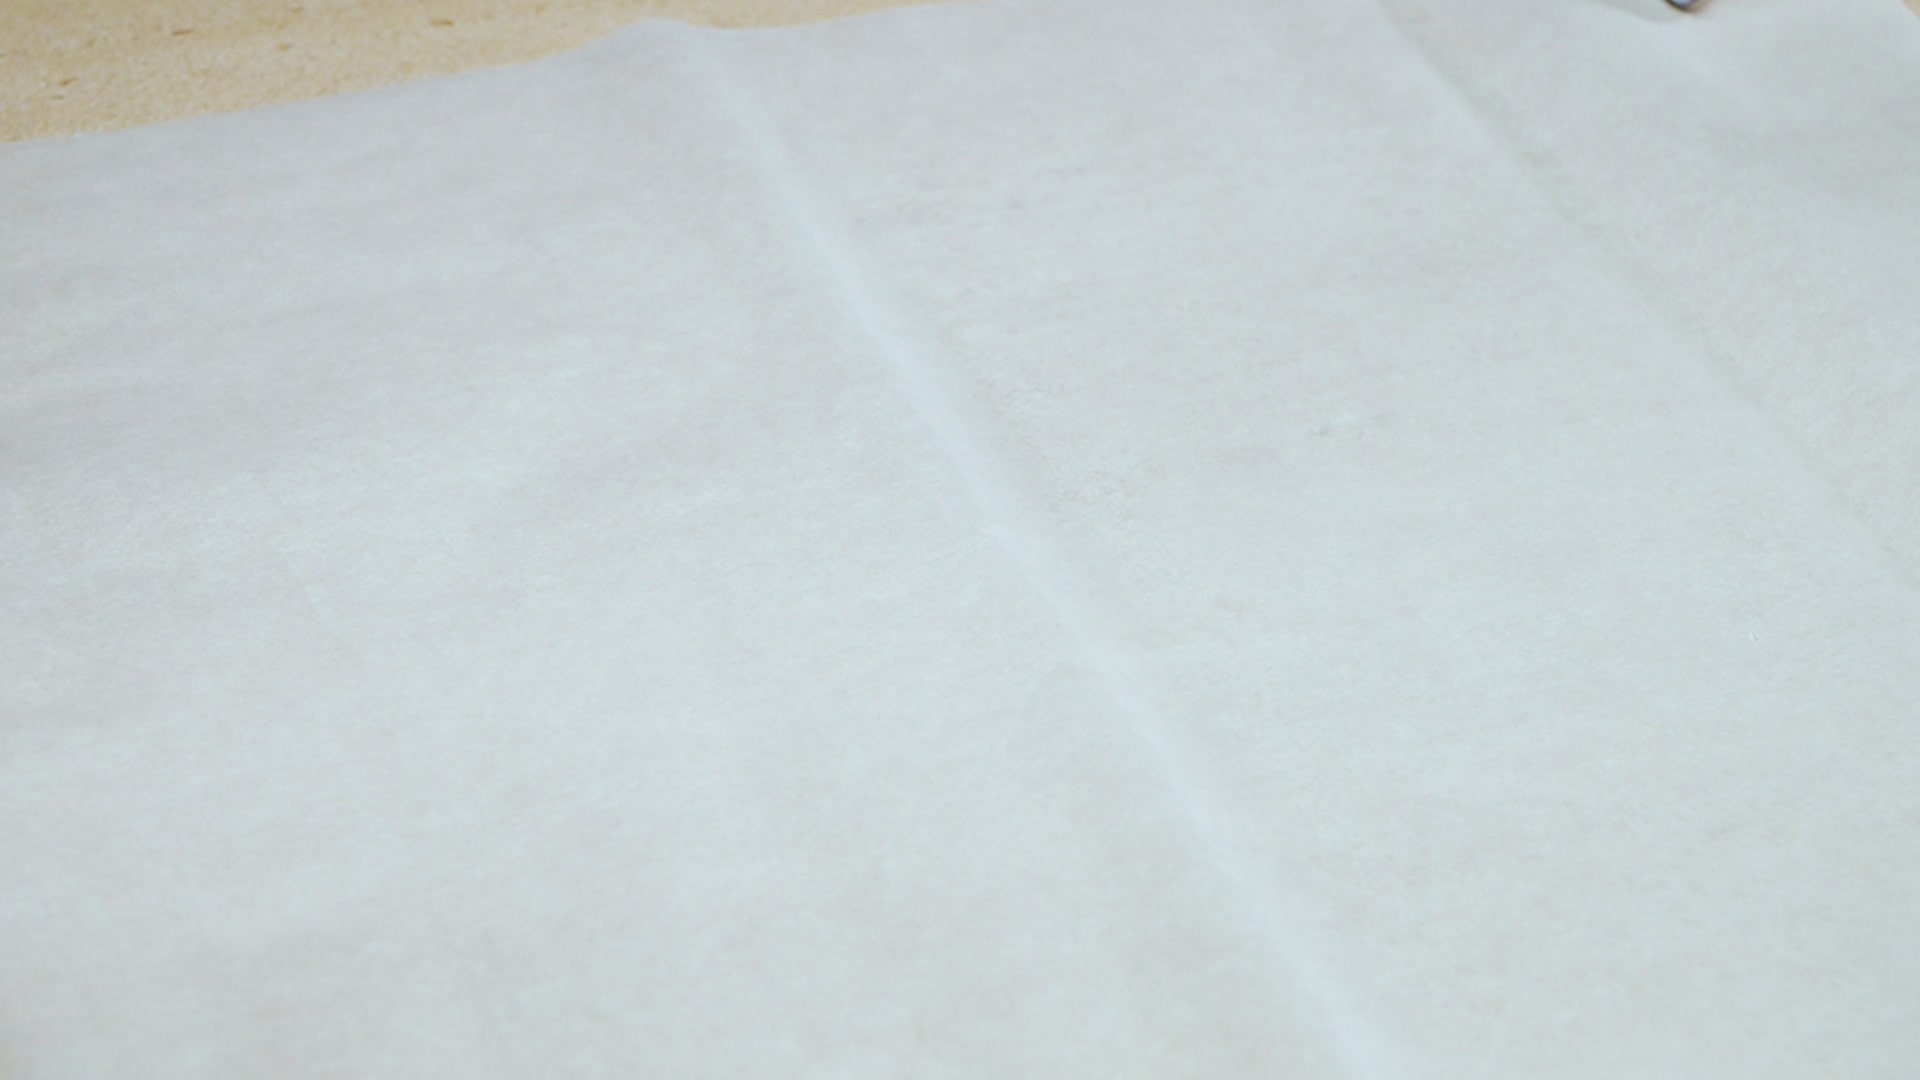 place parchment paper on a table